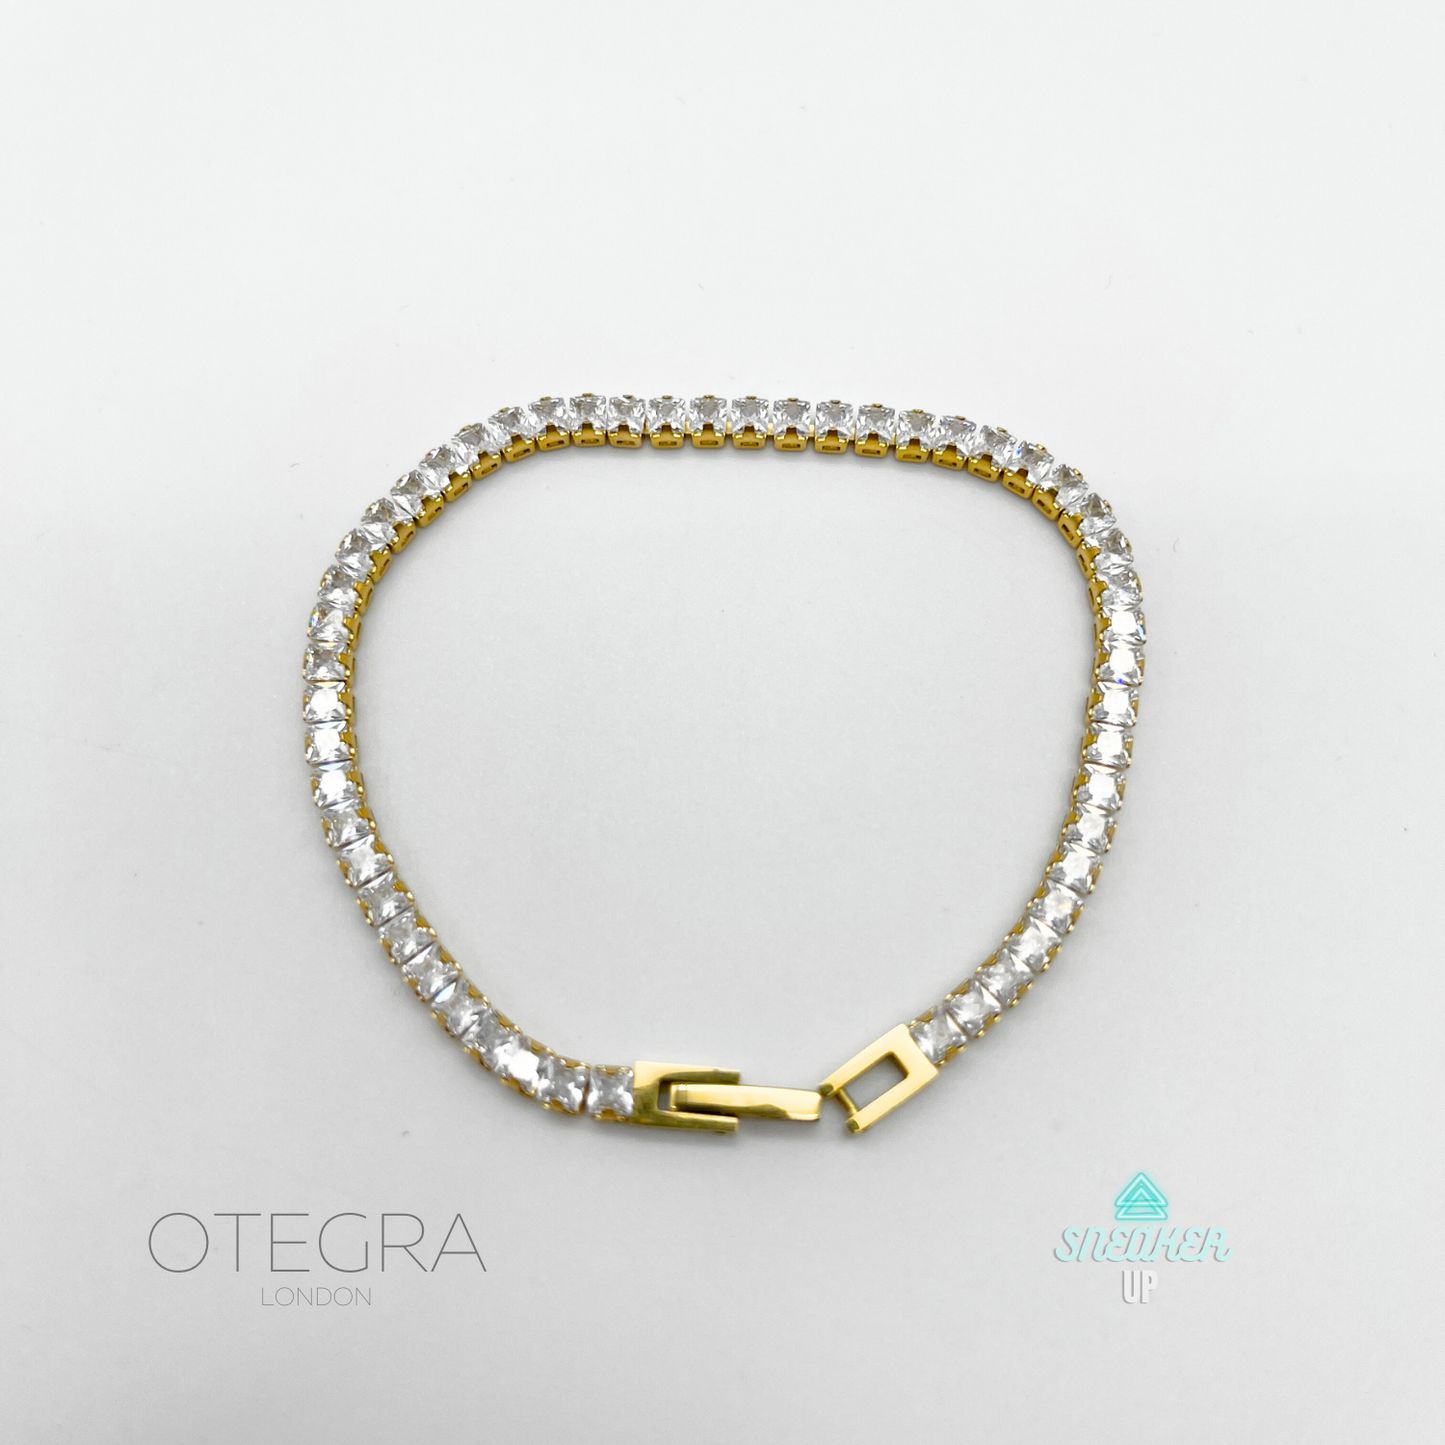 OTEGRA London 4mm Gold Tennis Bracelet